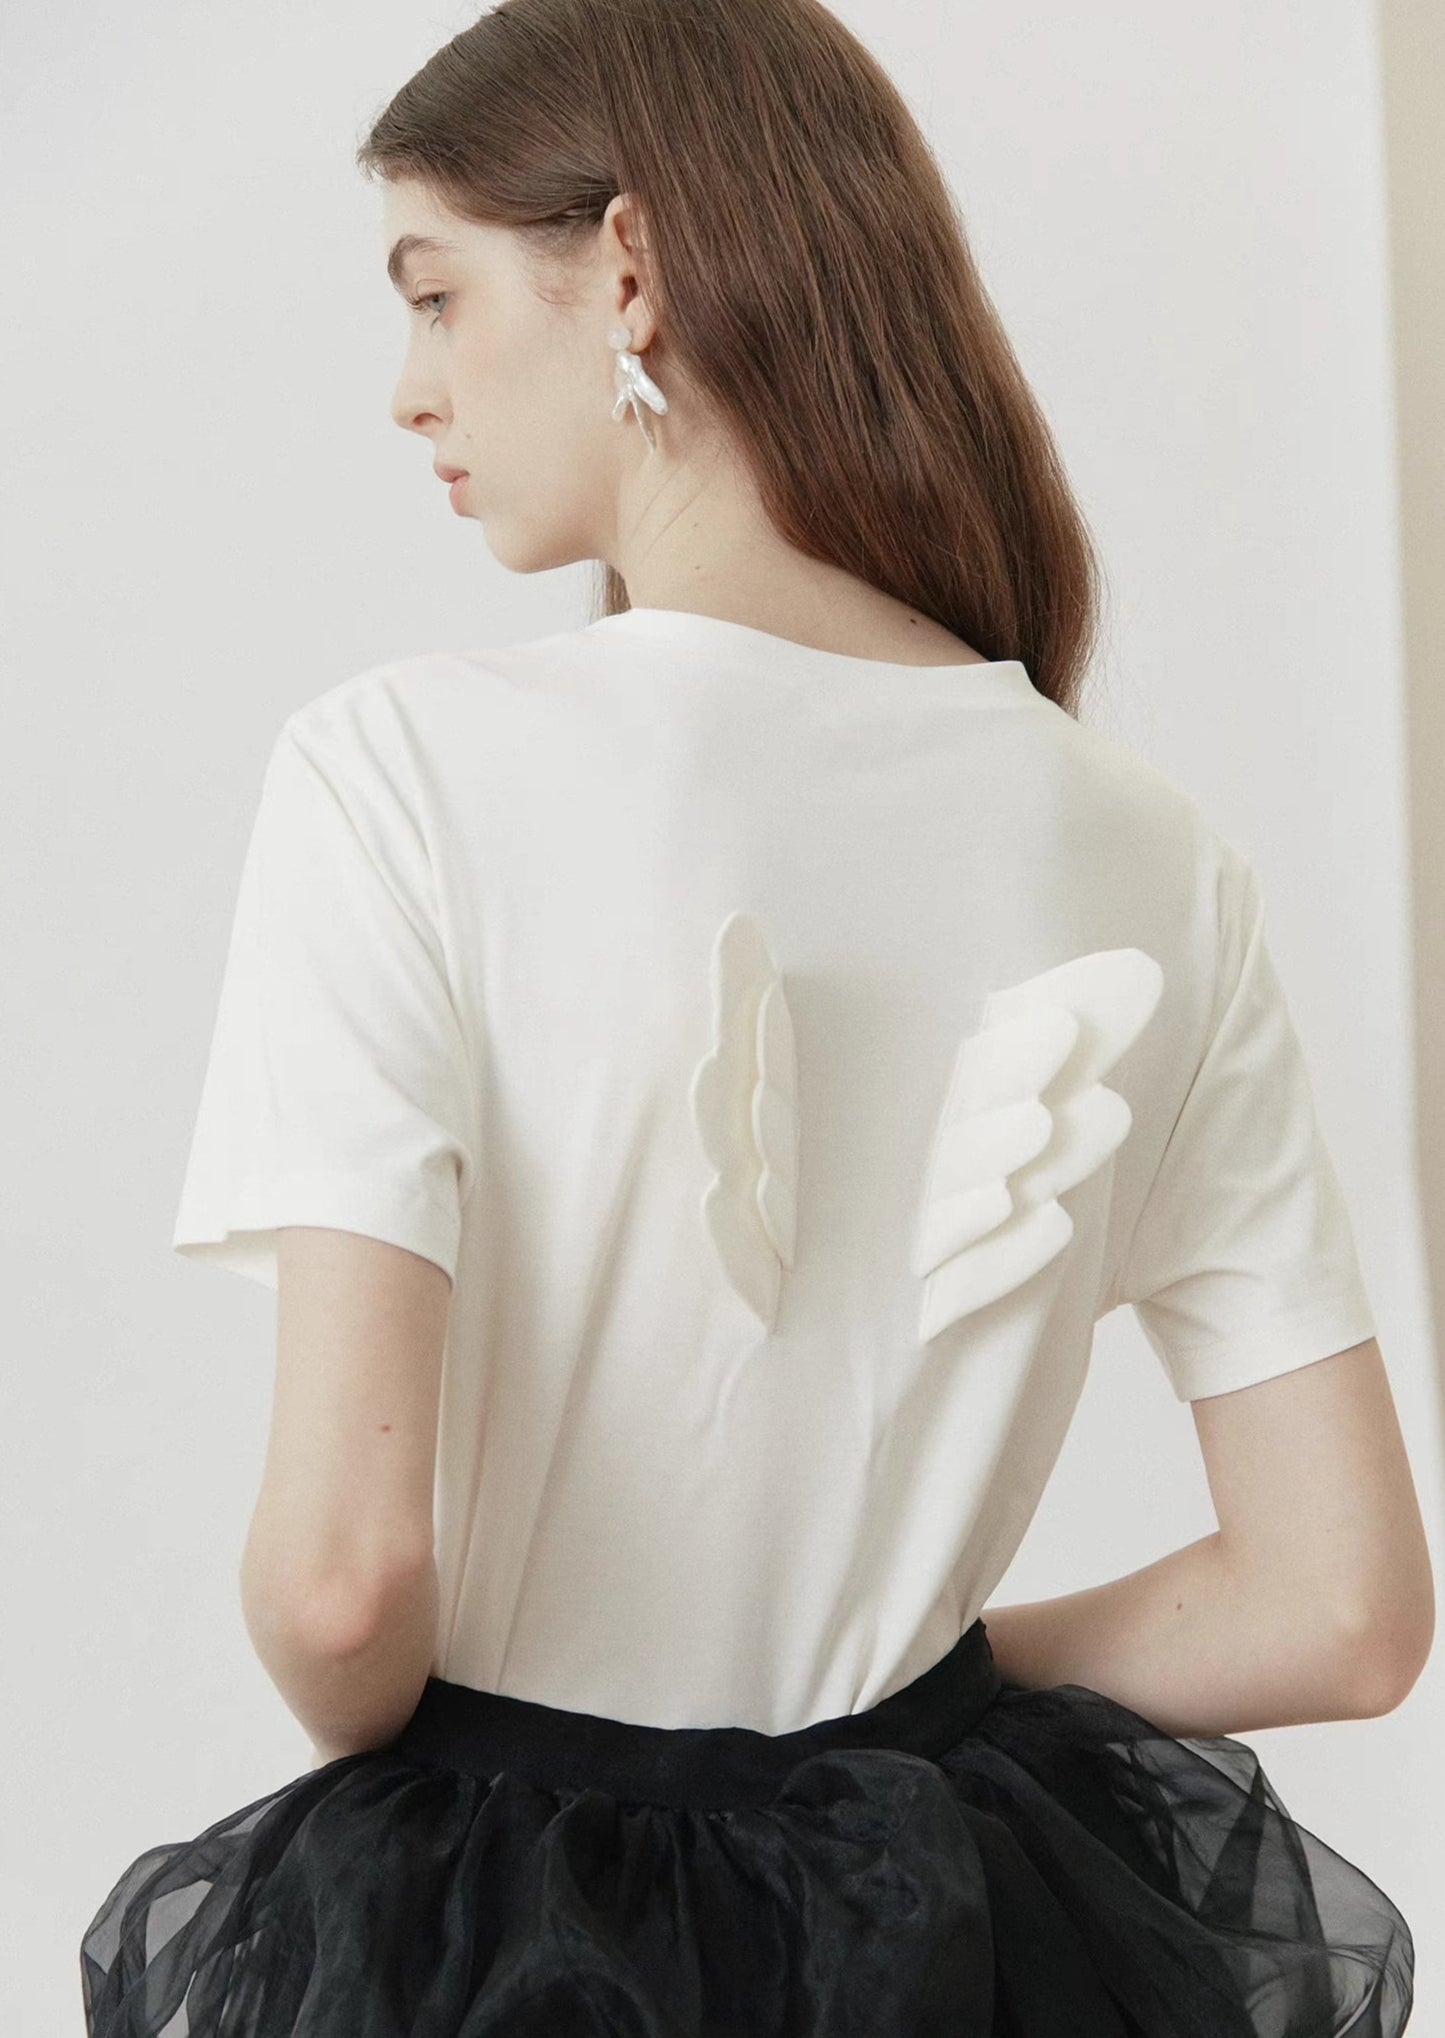 hollow white short-sleeved T-shirt 